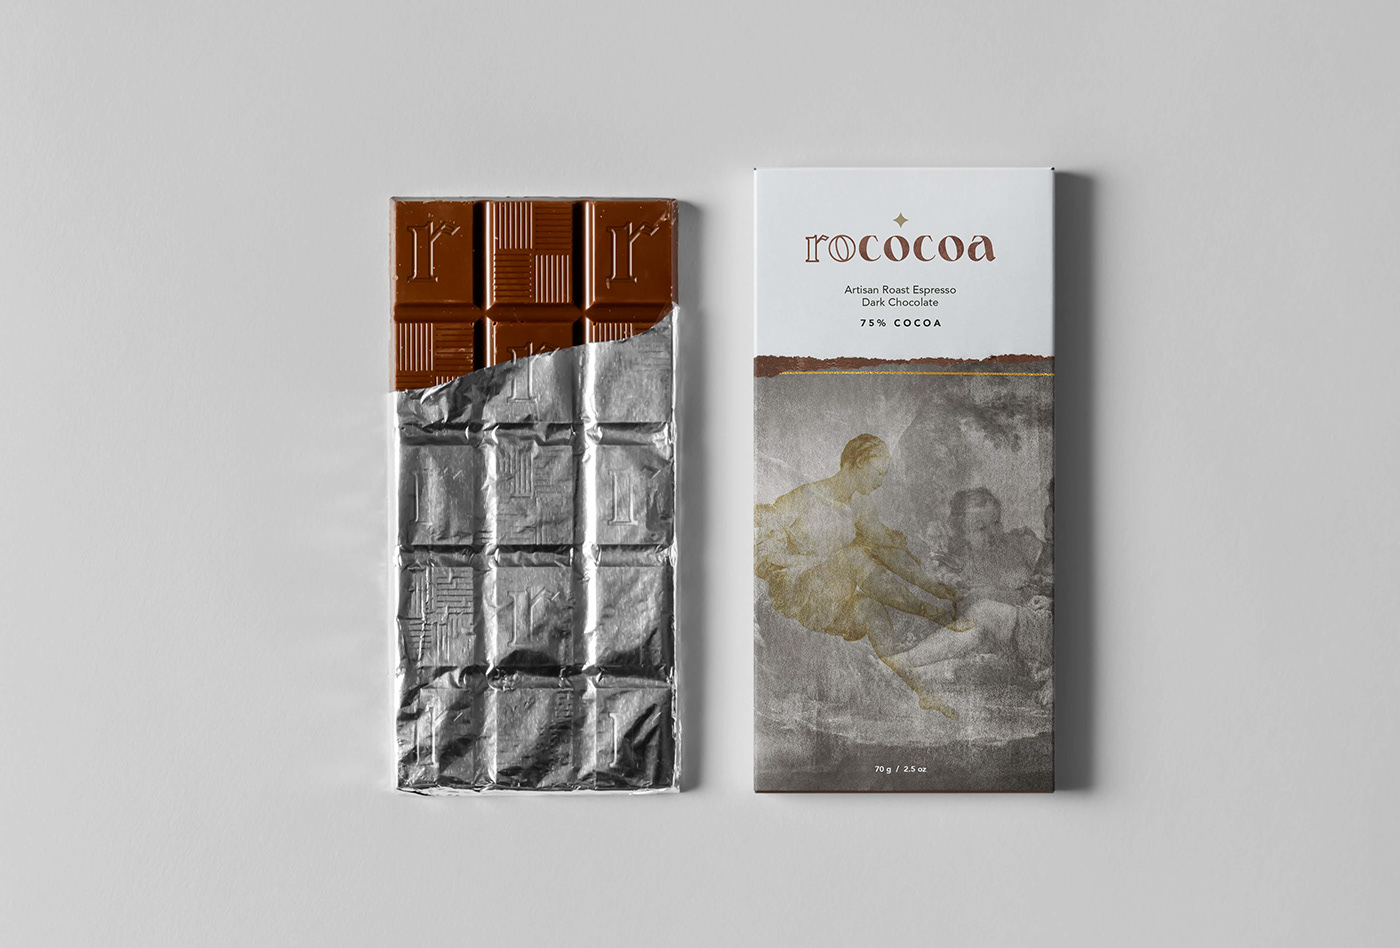 Rococo art inspired artisan gourmet chocolate branding and packaging design